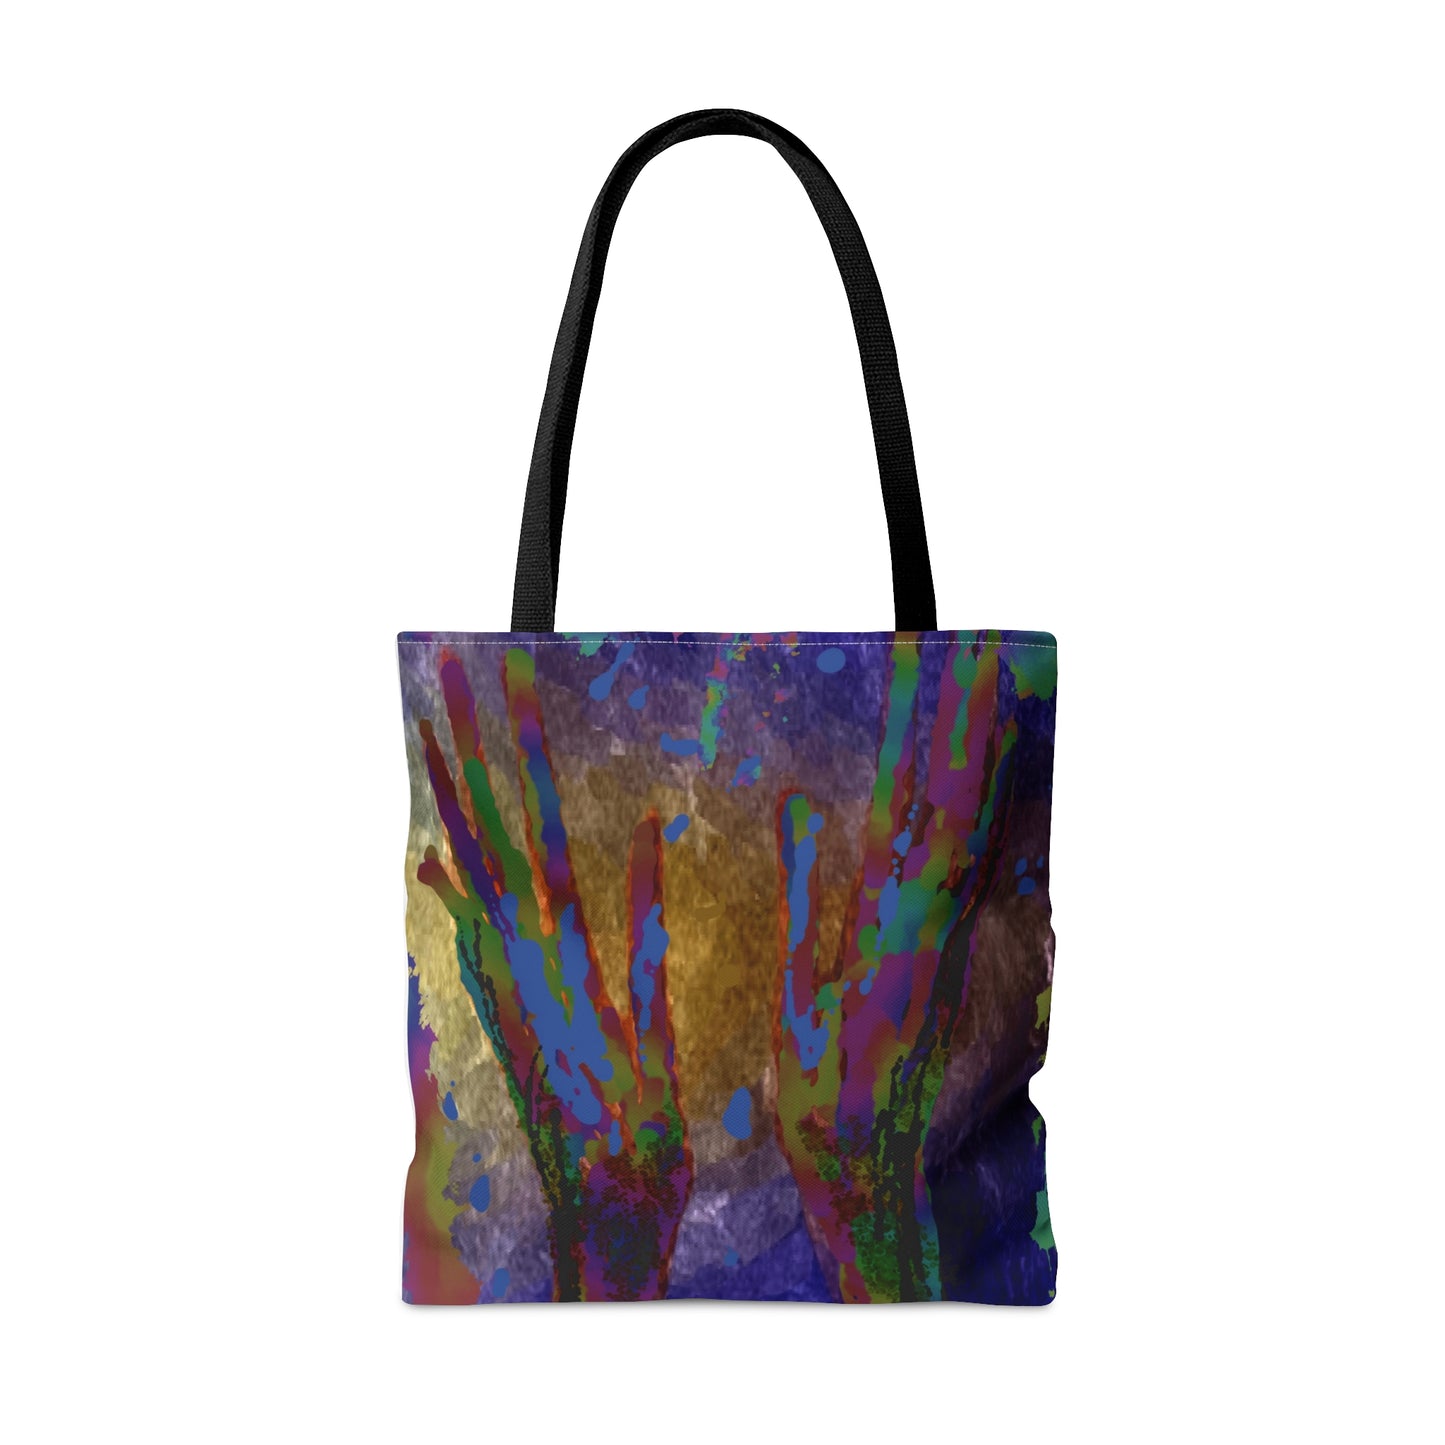 Impressionism hands tote bag